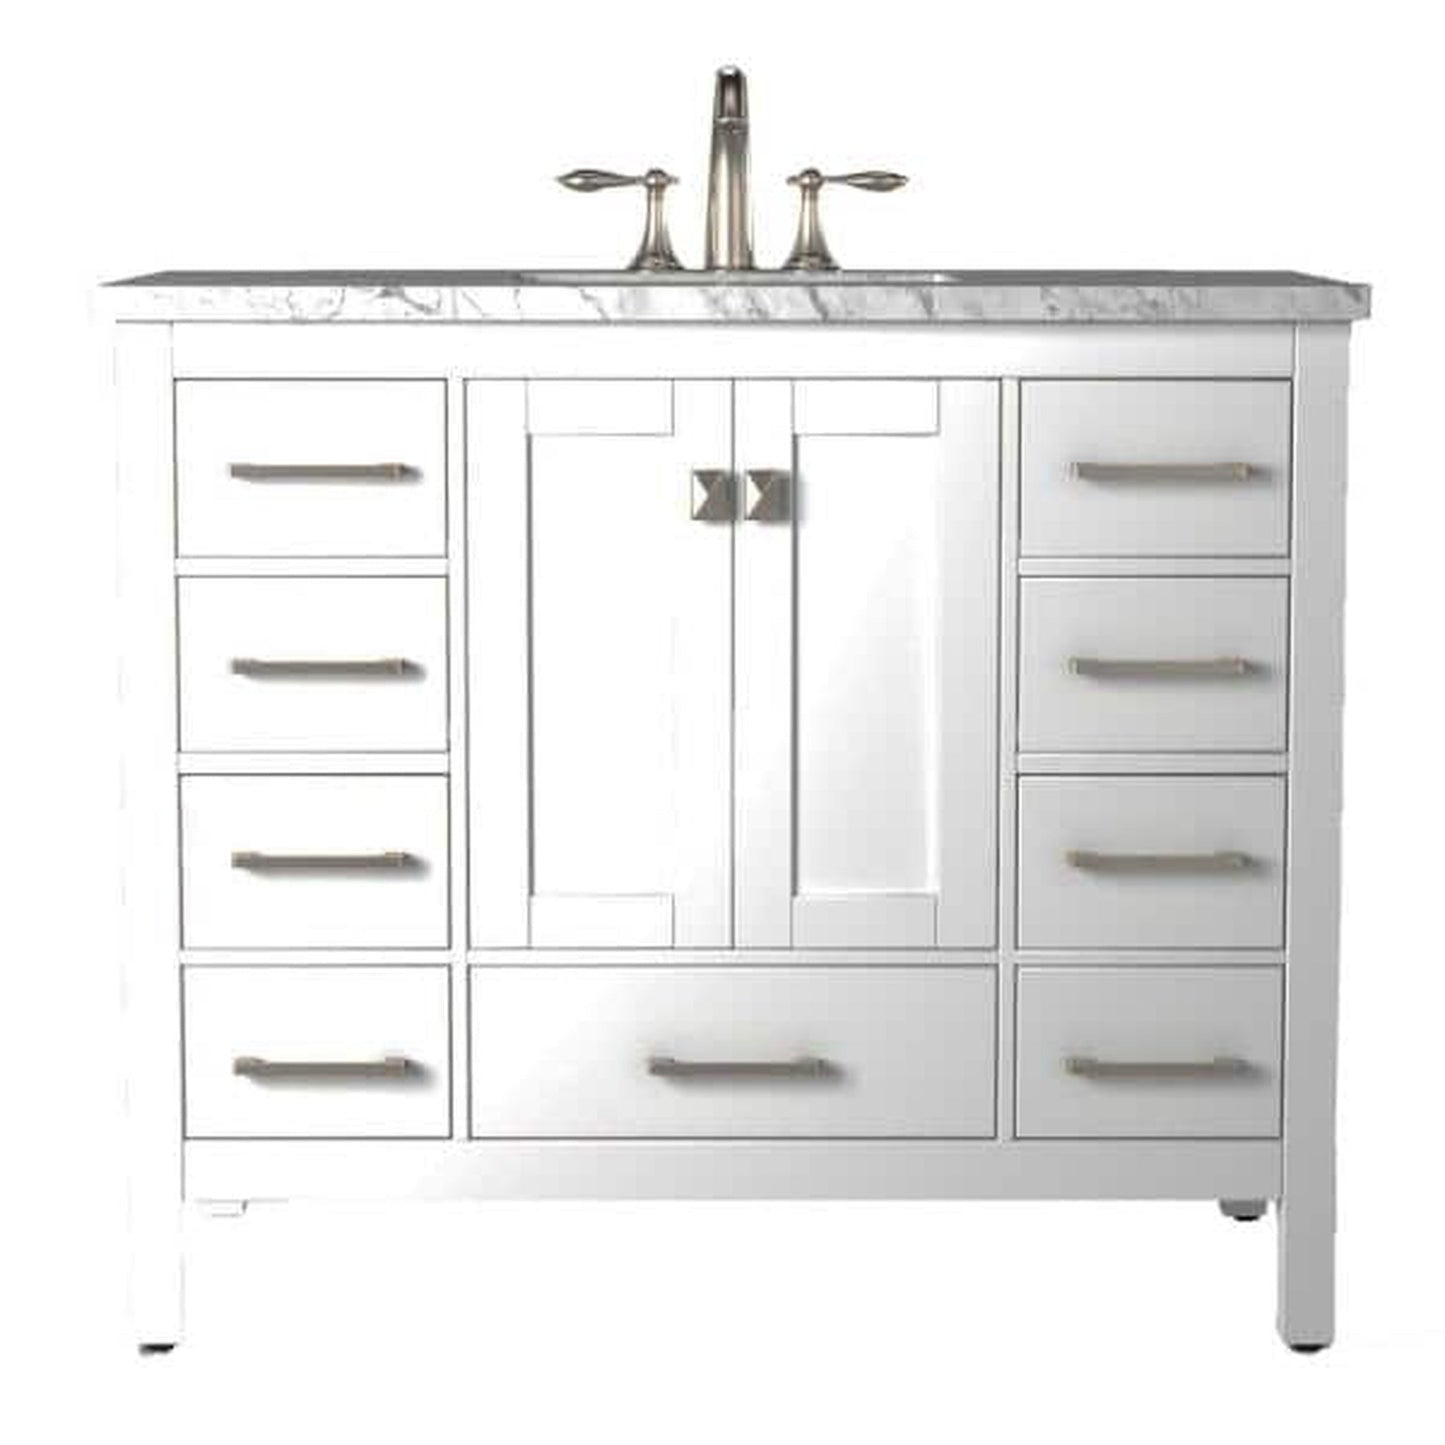 Eviva Aberdeen 48" x 34" White Freestanding Bathroom Vanity With Single Undermount Sink